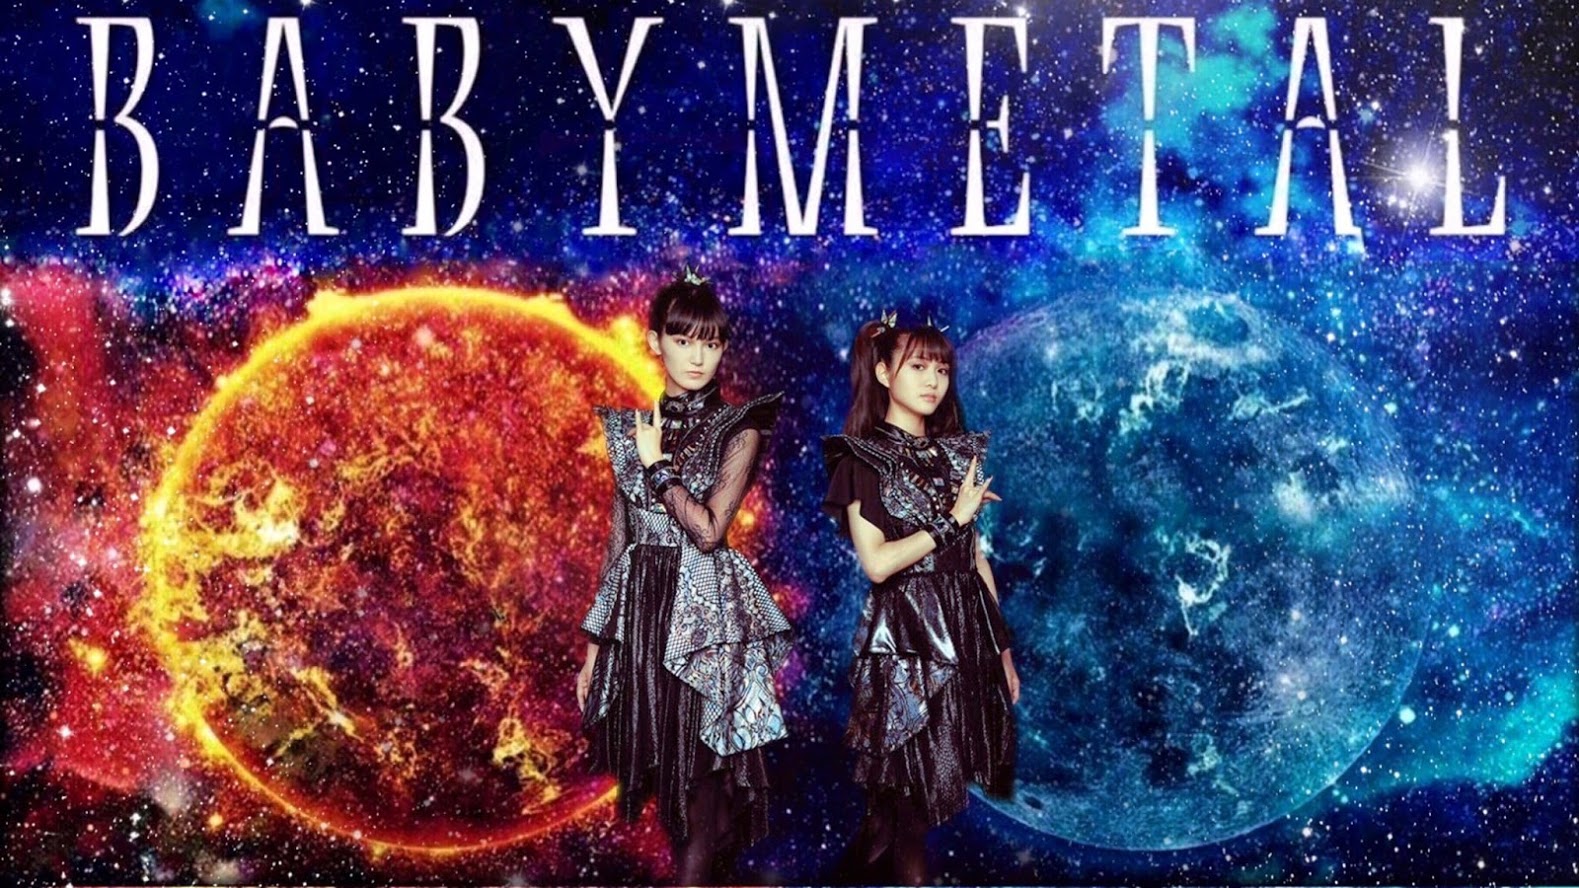 babymetal ライブブルーレイ5タイトルセット その他 DVD/ブルーレイ 本・音楽・ゲーム 販売の最低価格